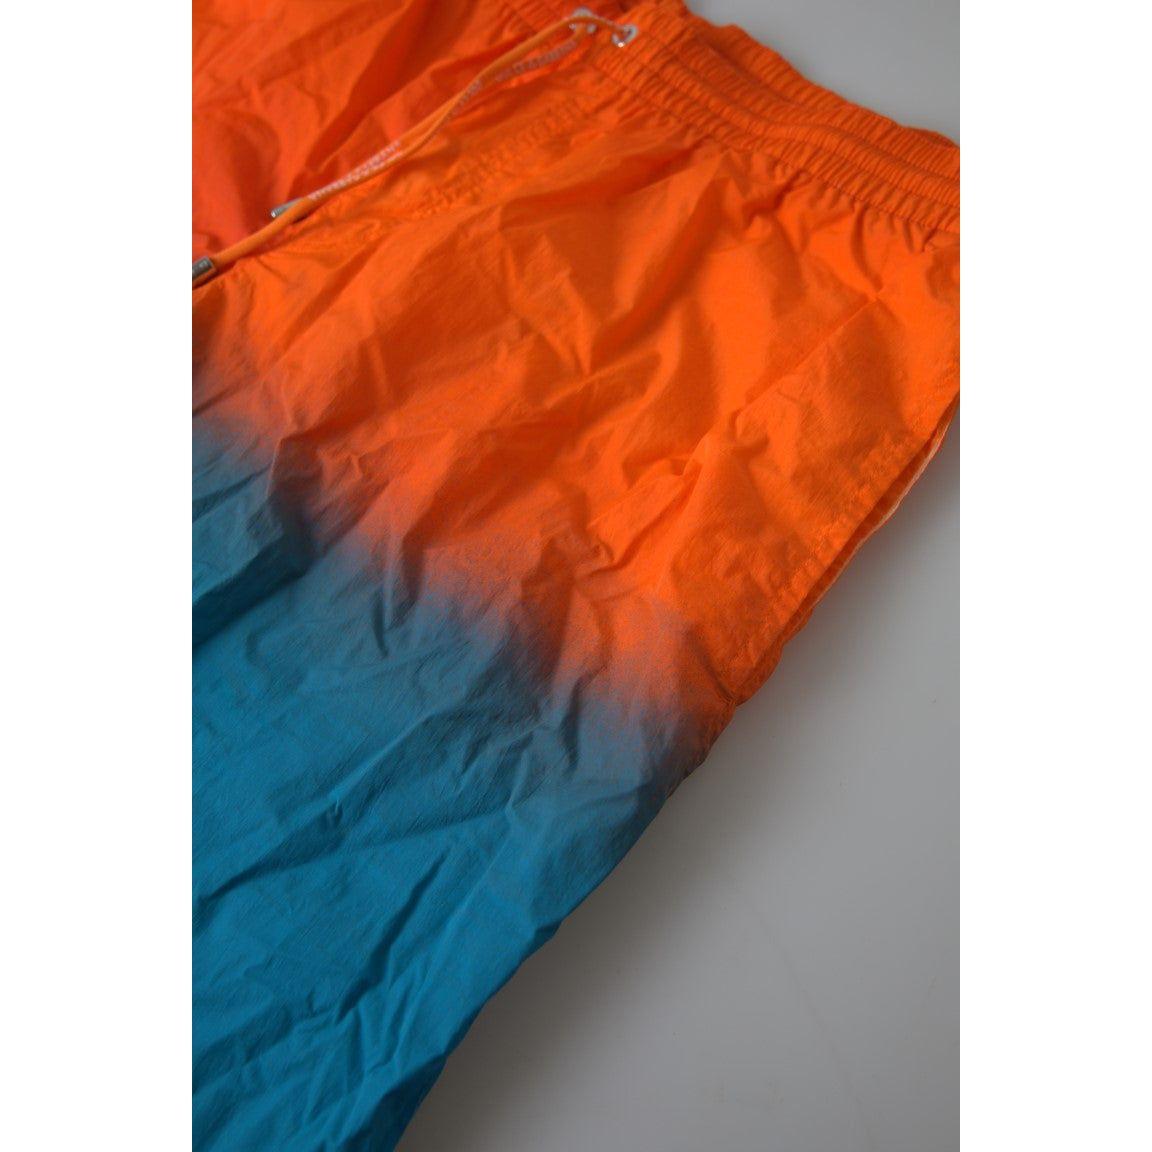 Dolce & Gabbana Gradient Effect Swim Shorts in Vibrant Orange orange-blue-gradient-beachwear-swimwear-shorts 465A2648-Medium-36d99251-454.jpg